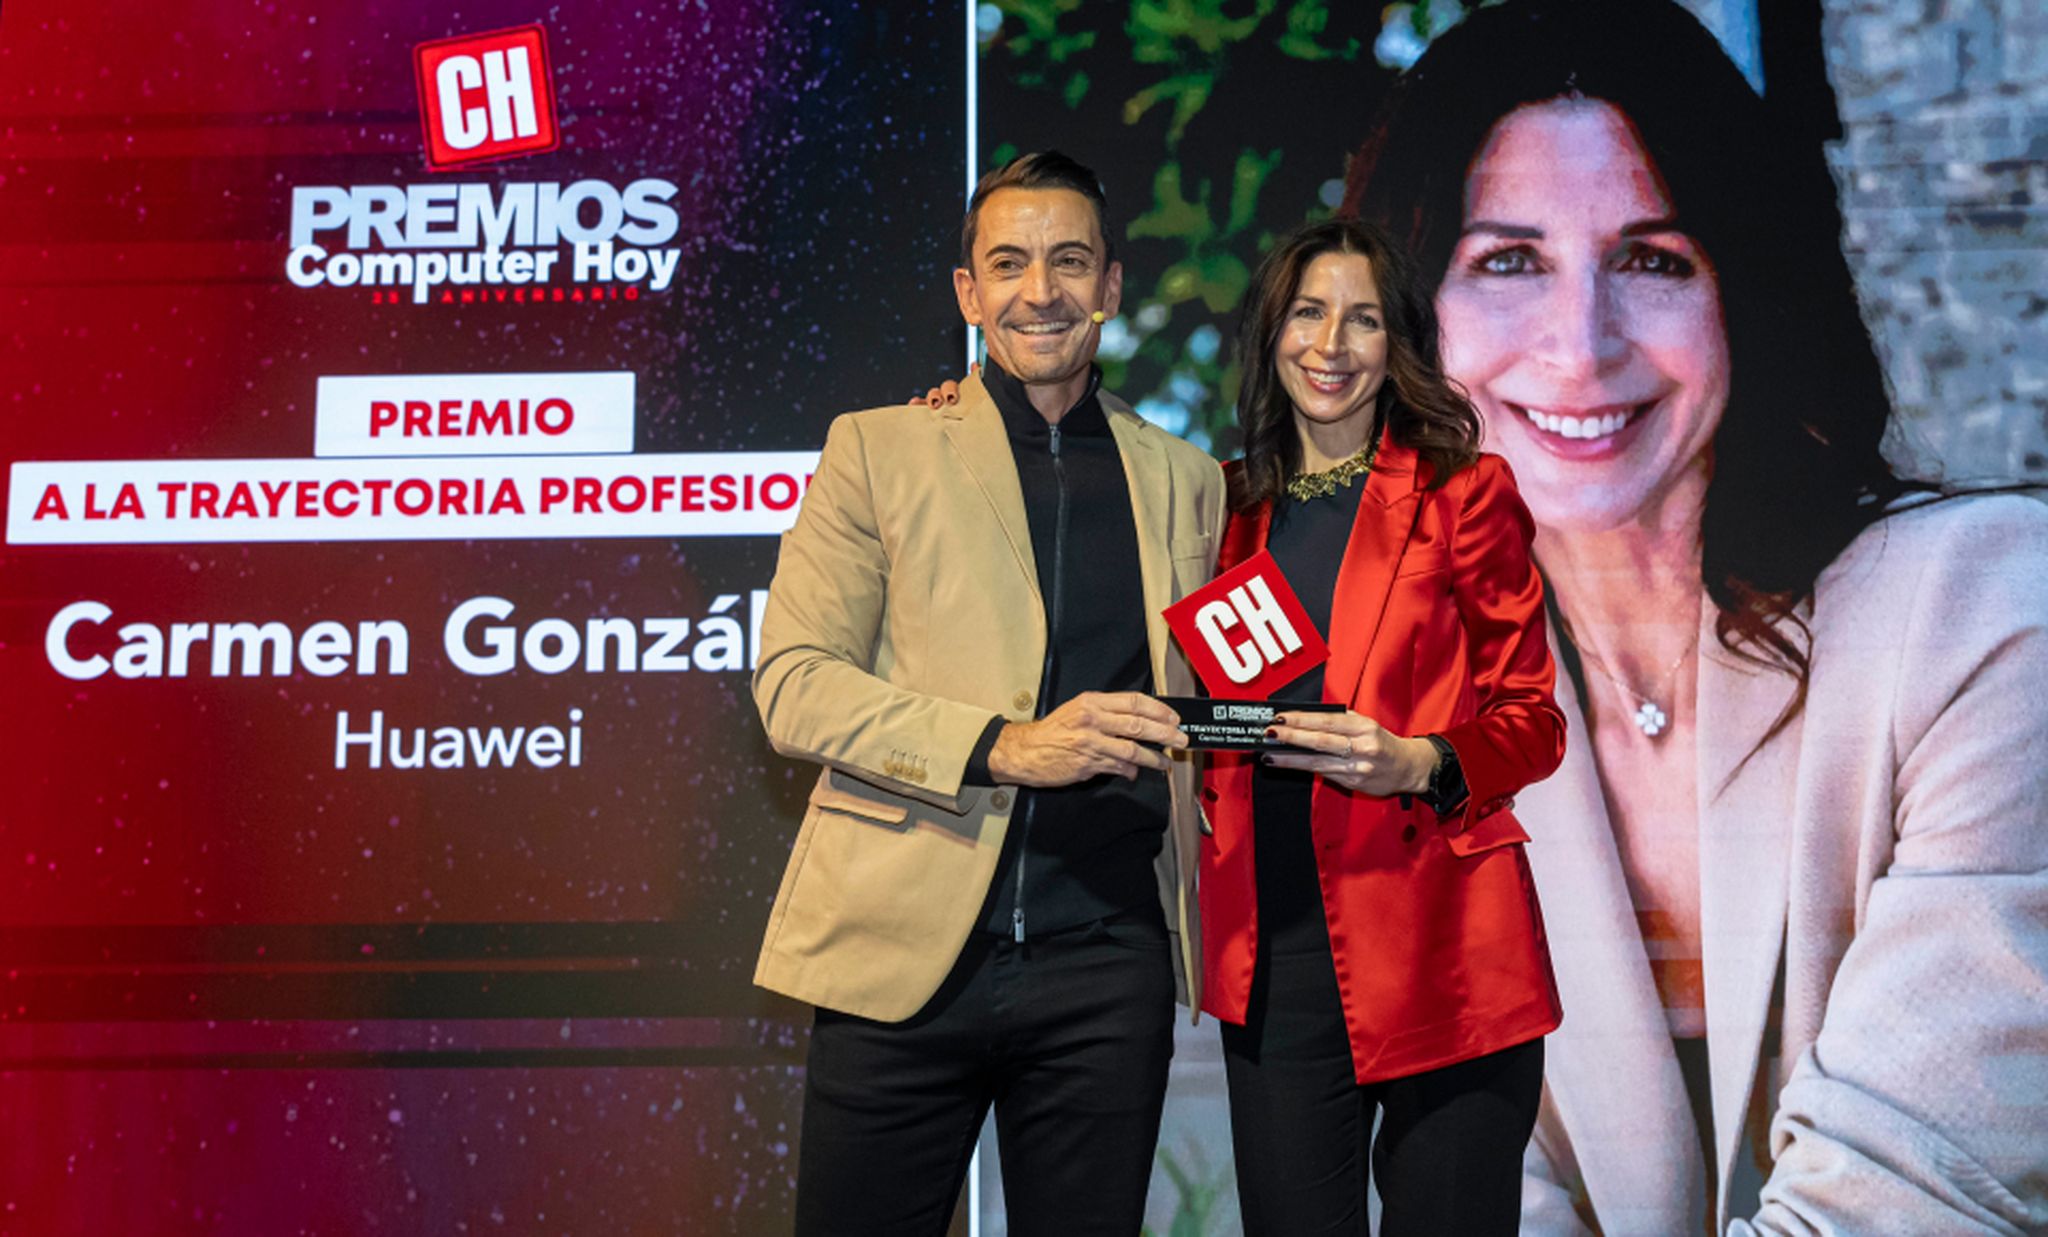 Manuel del Campo, CEO de Axel Springer España, entrega a Carmen González, vicepresidenta de Huawei España el premio especial a la Trayectoria profesional.